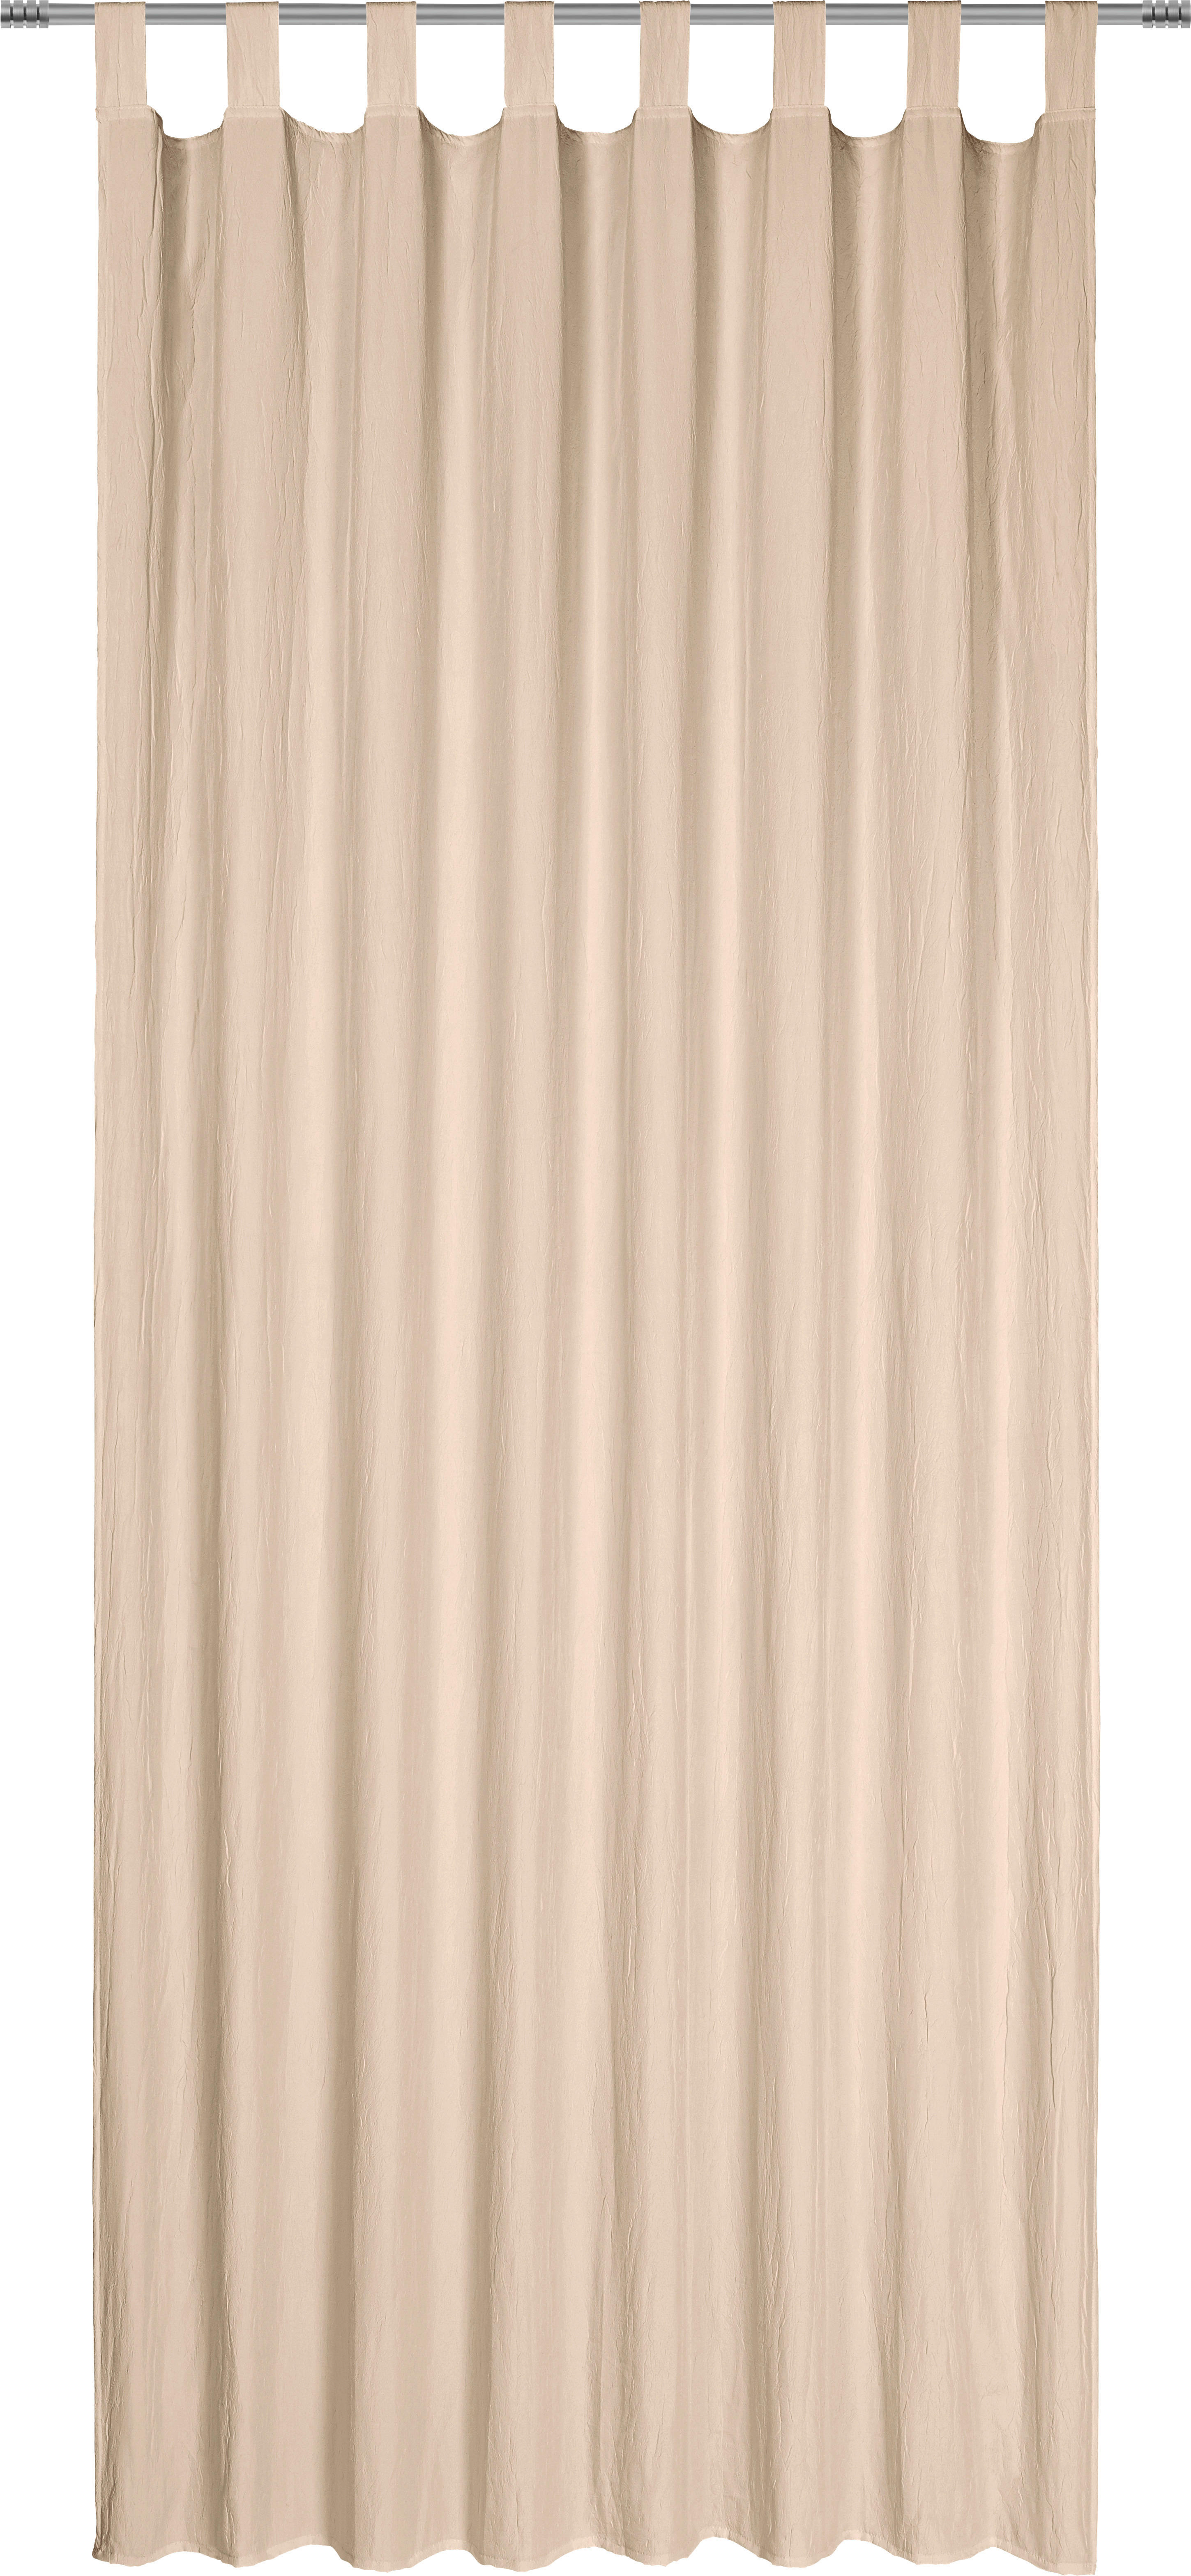 ZAVESA Z ZANKAMI POLO  pol prosojno  135/245 cm   - peščena, Konvencionalno, tekstil (135/245cm) - Boxxx